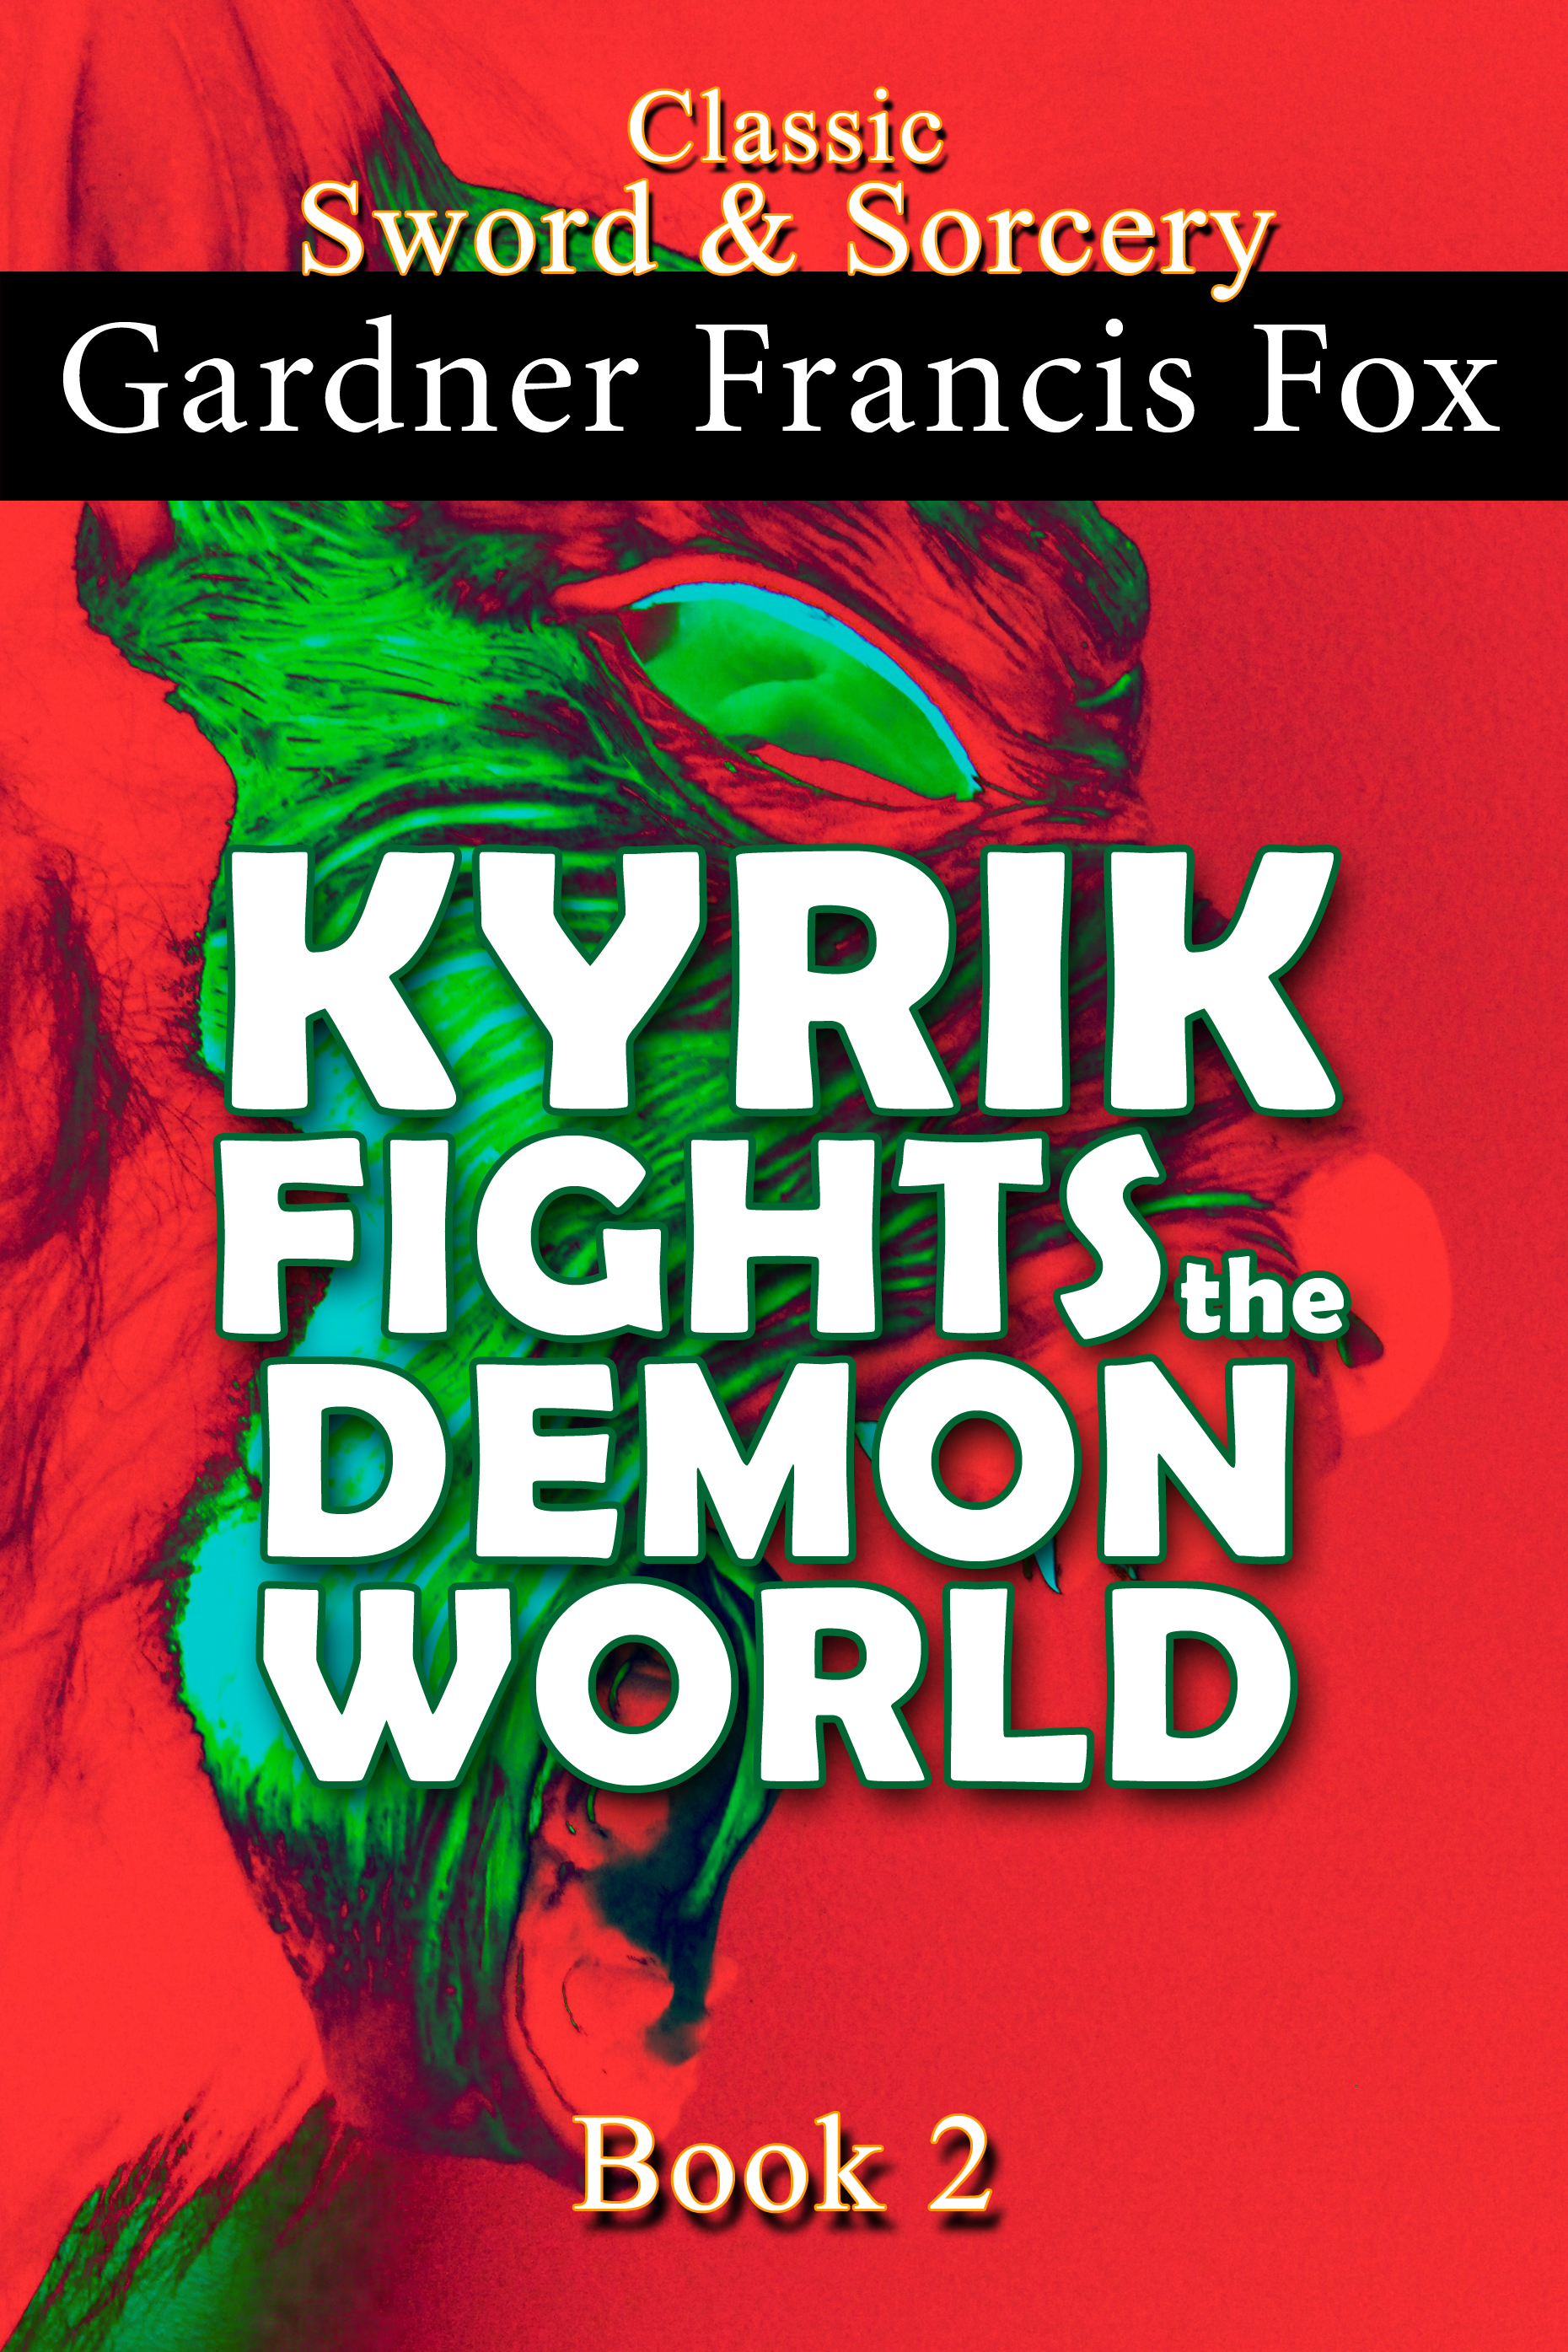 FREE: Kyrik Fights the Demon World by Gardner Francis Fox